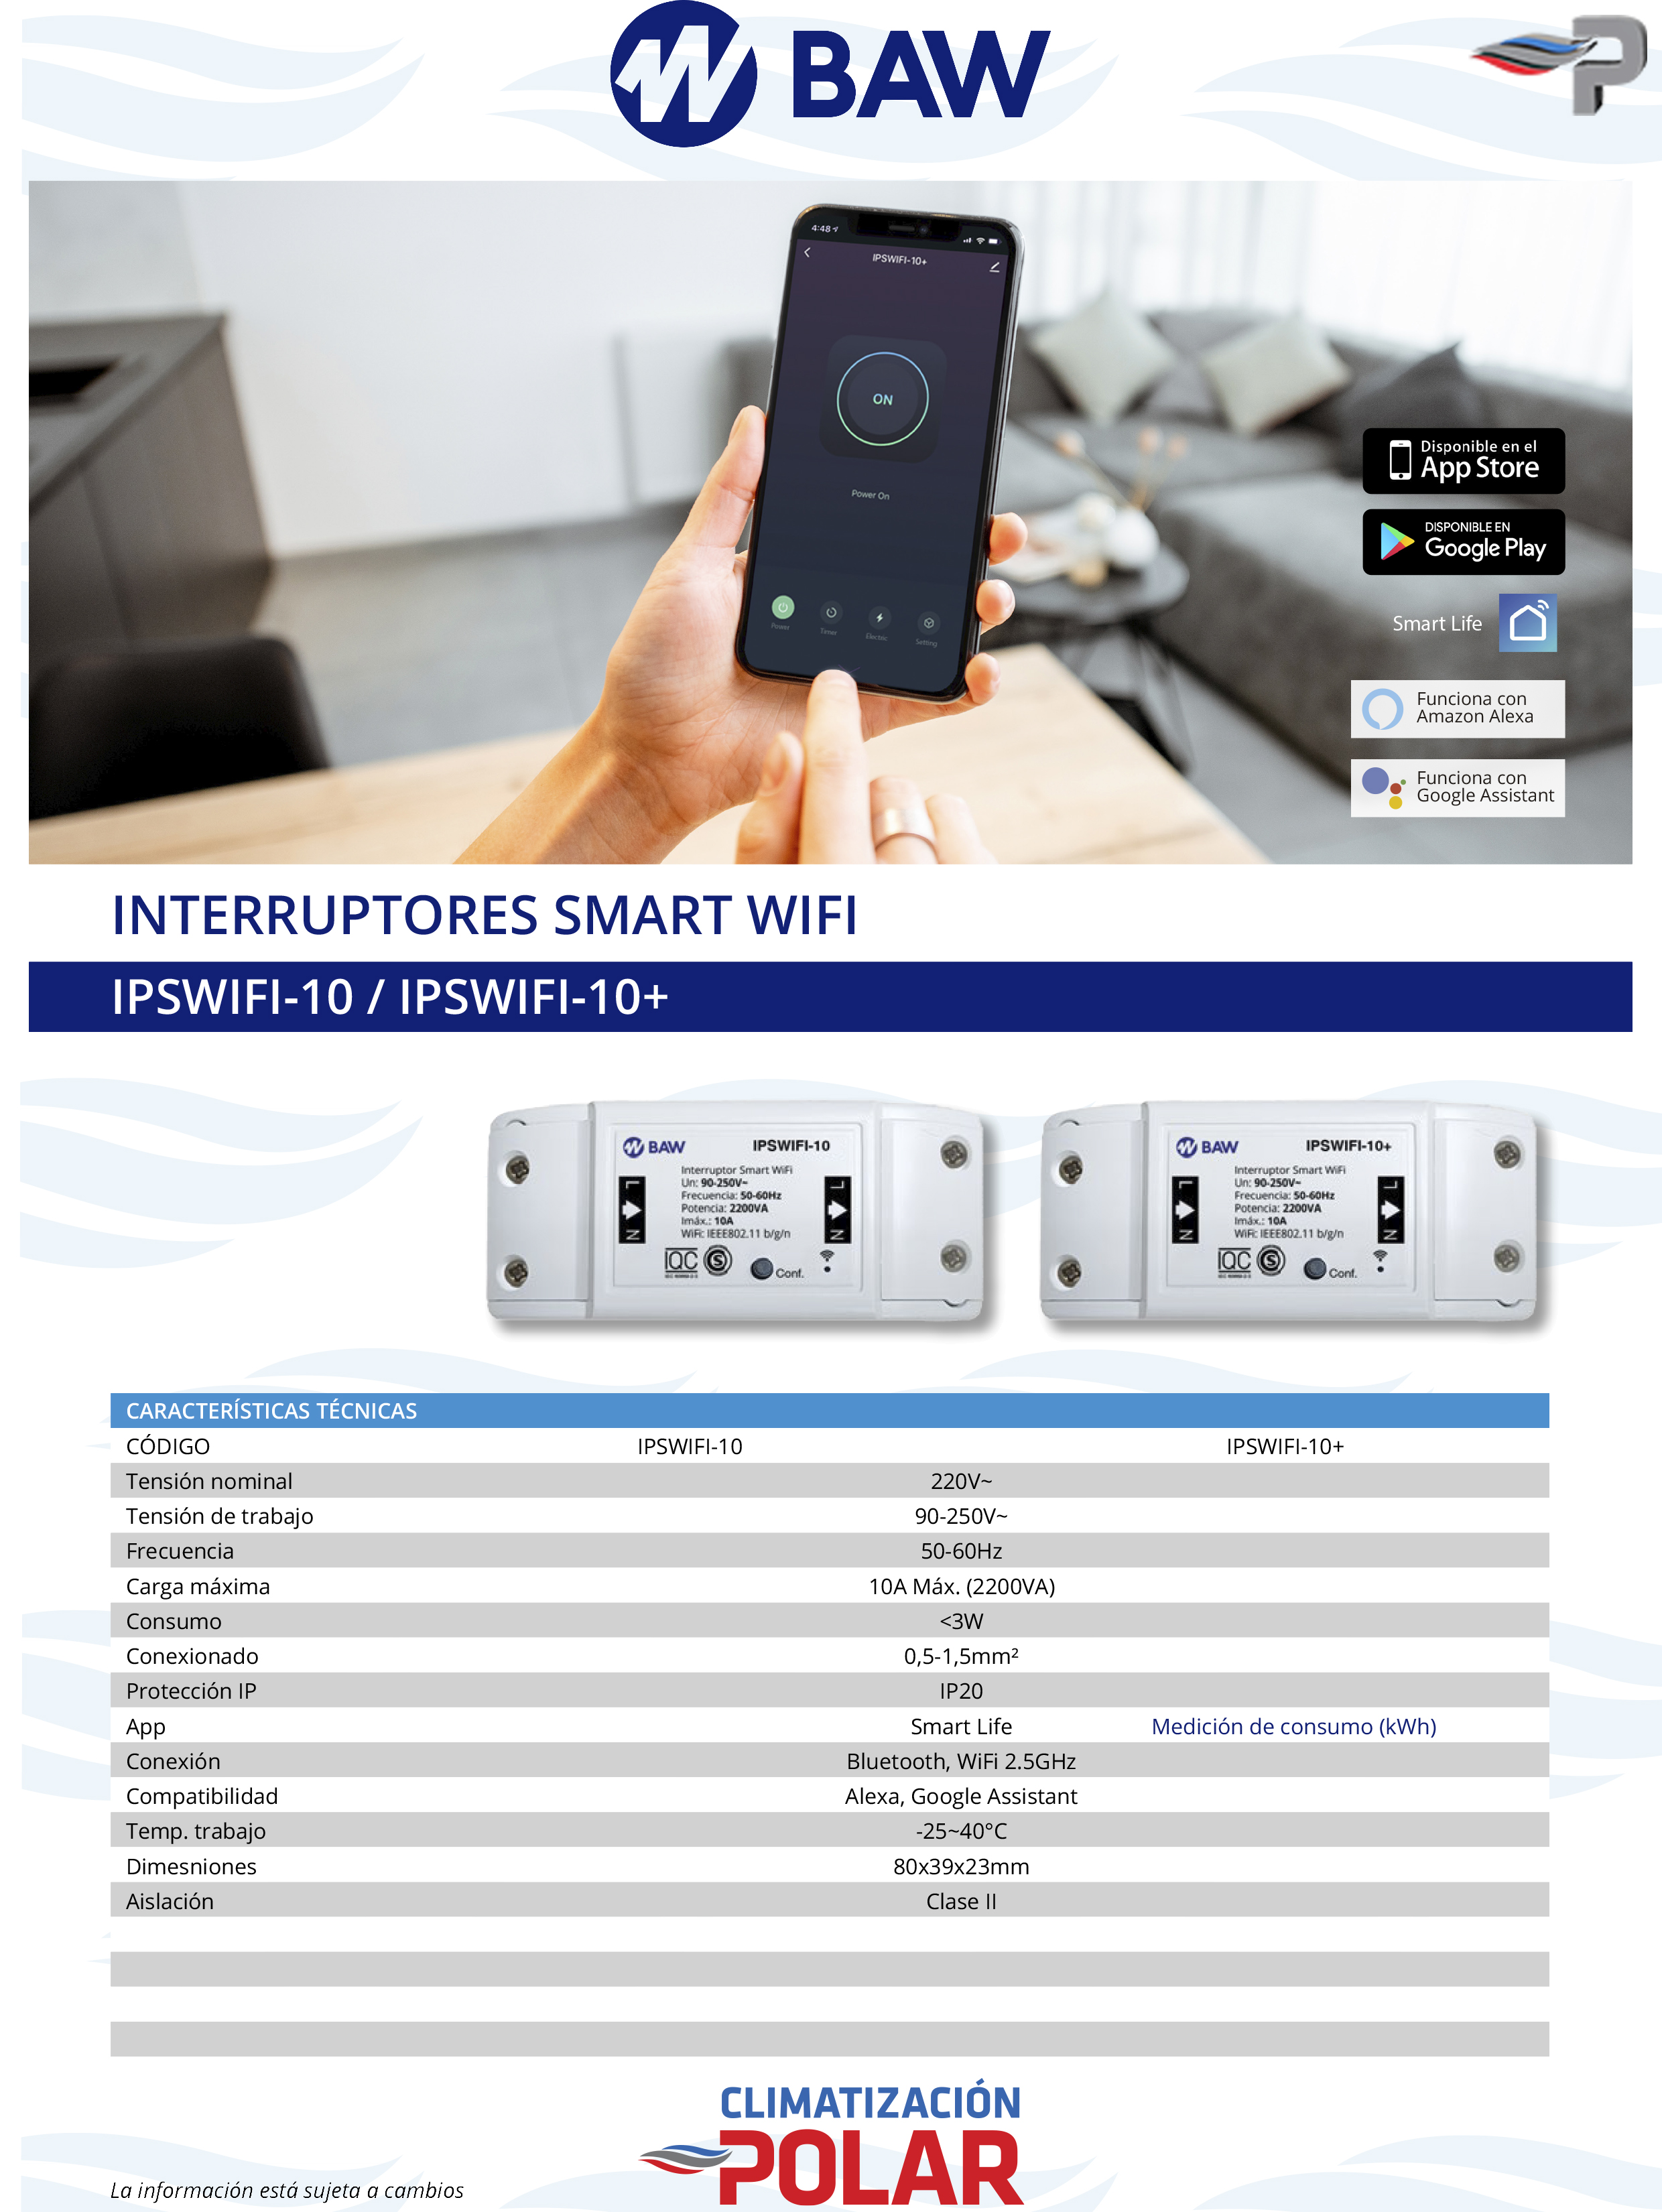 Interruptor Inteligente WIFI BAW mod IPSWIFI-10